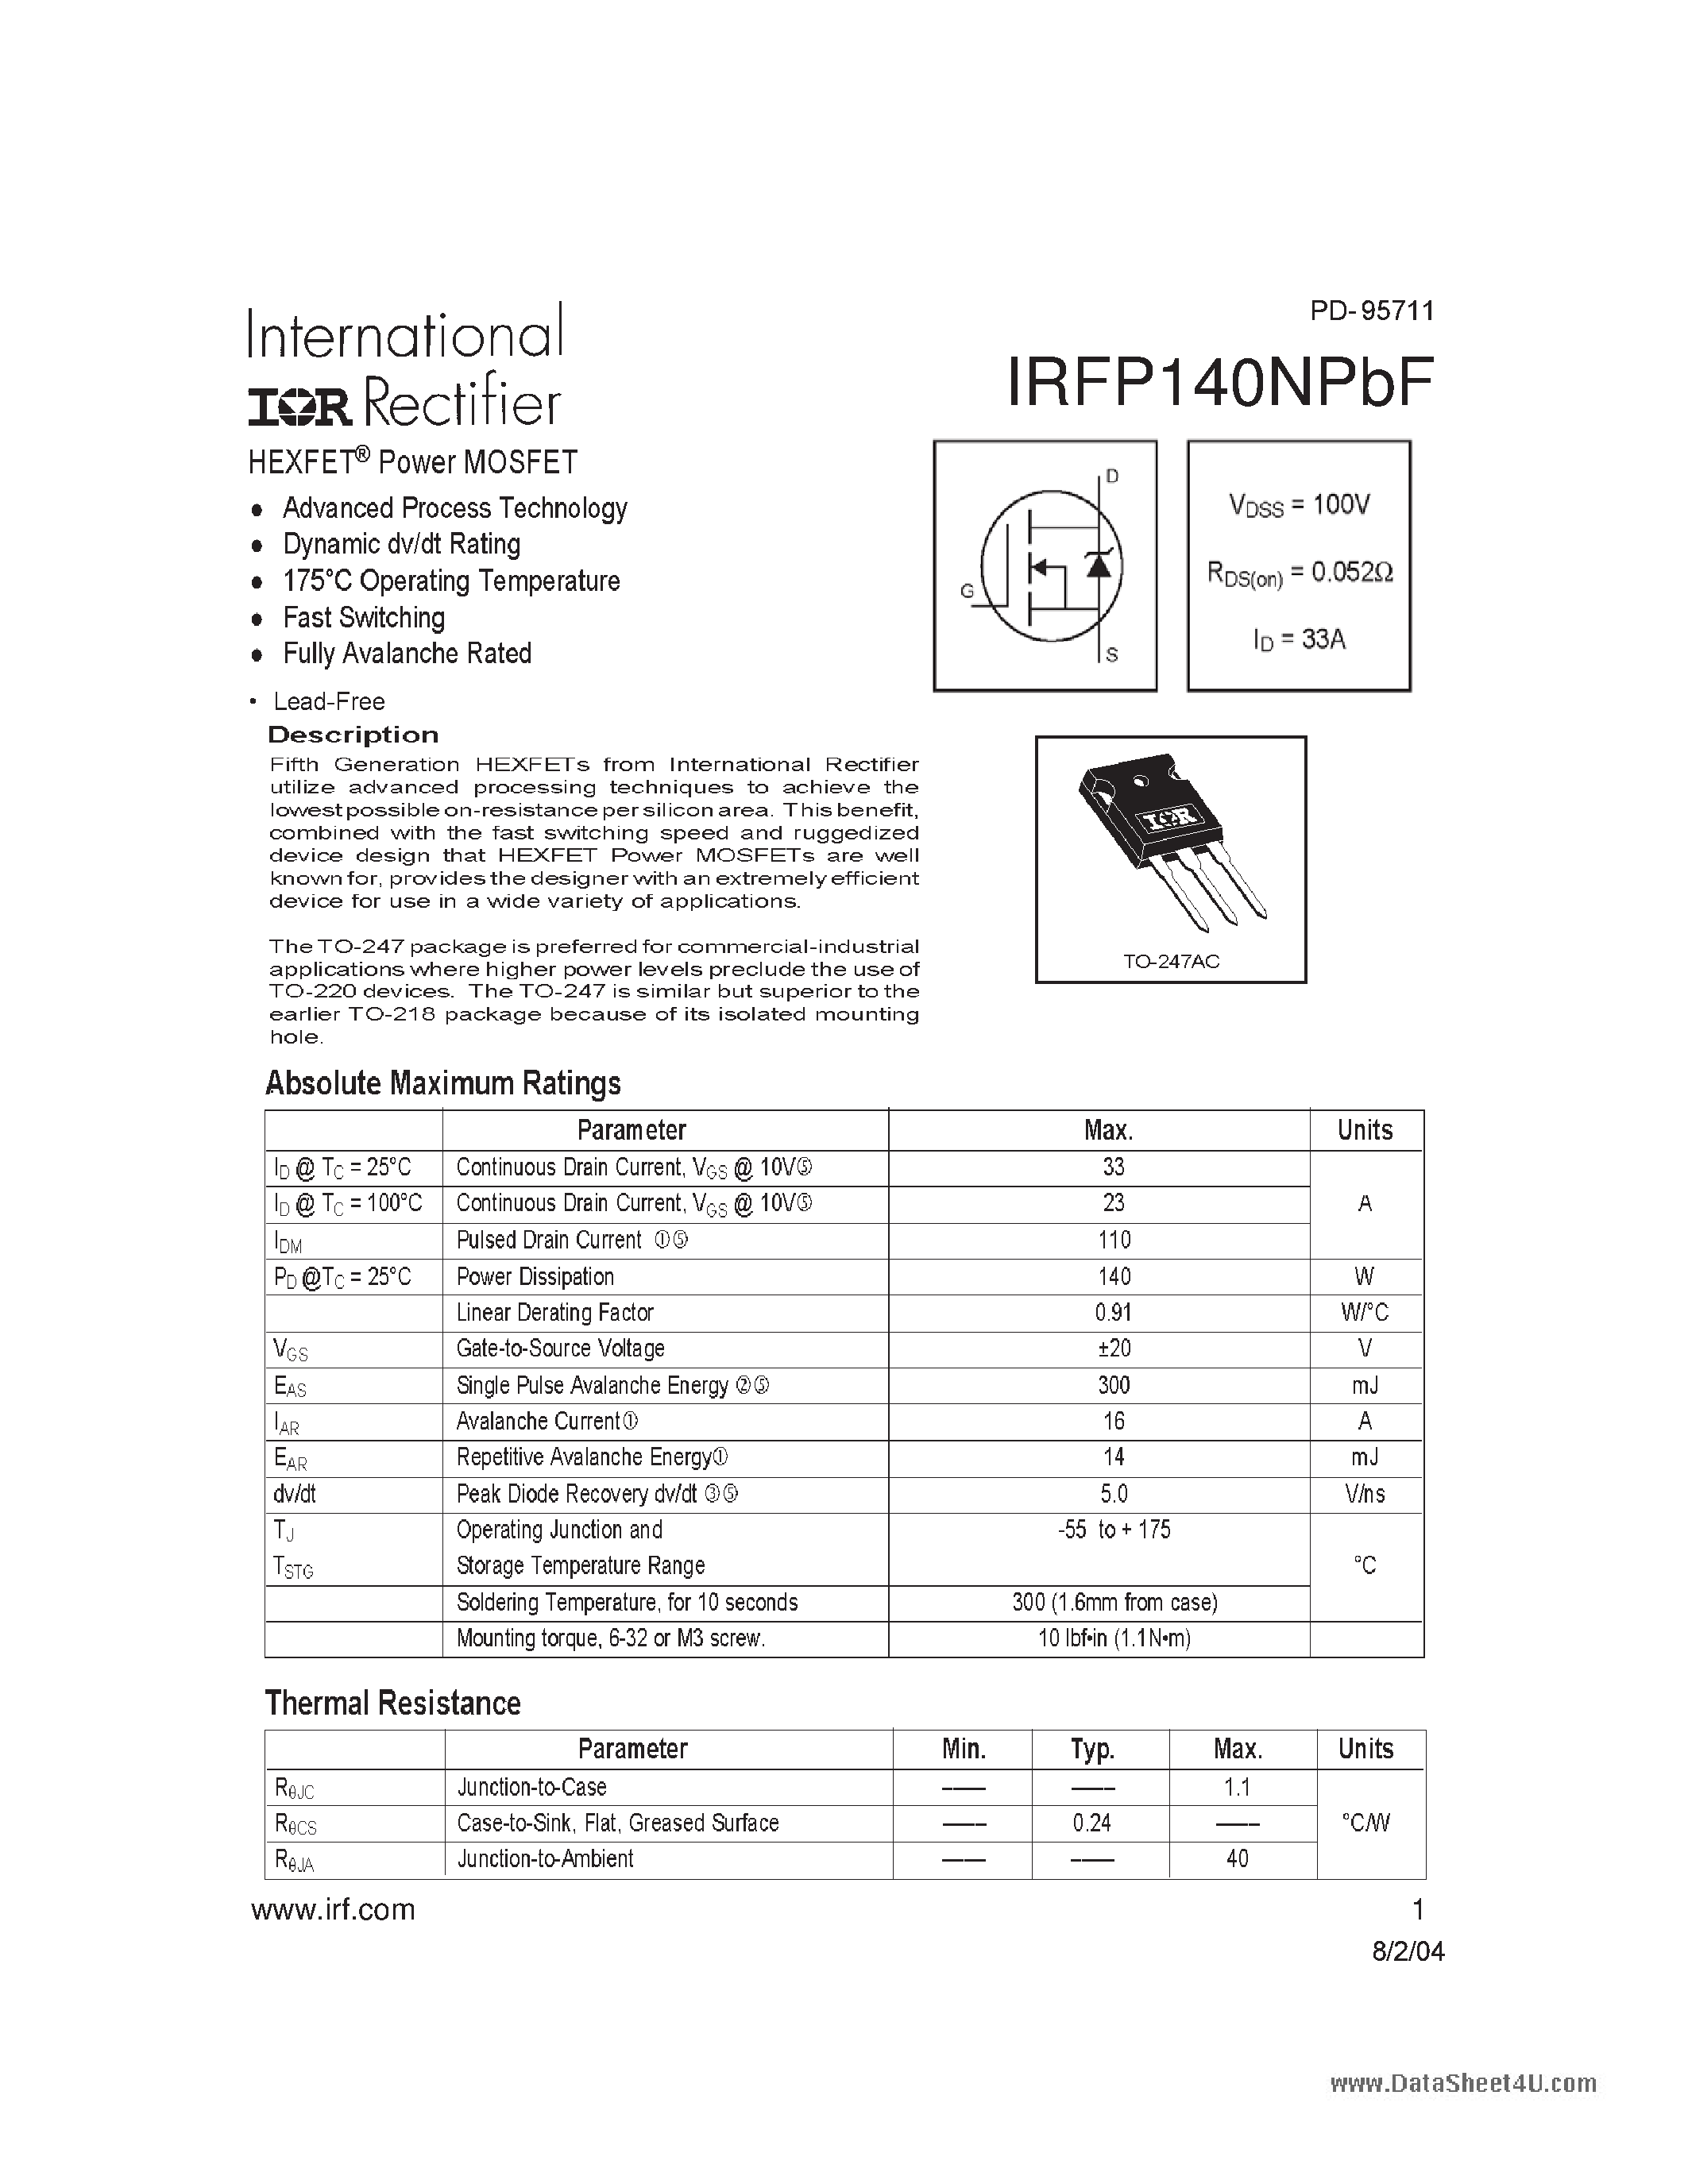 Даташит IRFP140NPBF - HEXFET Power MOSFET страница 1